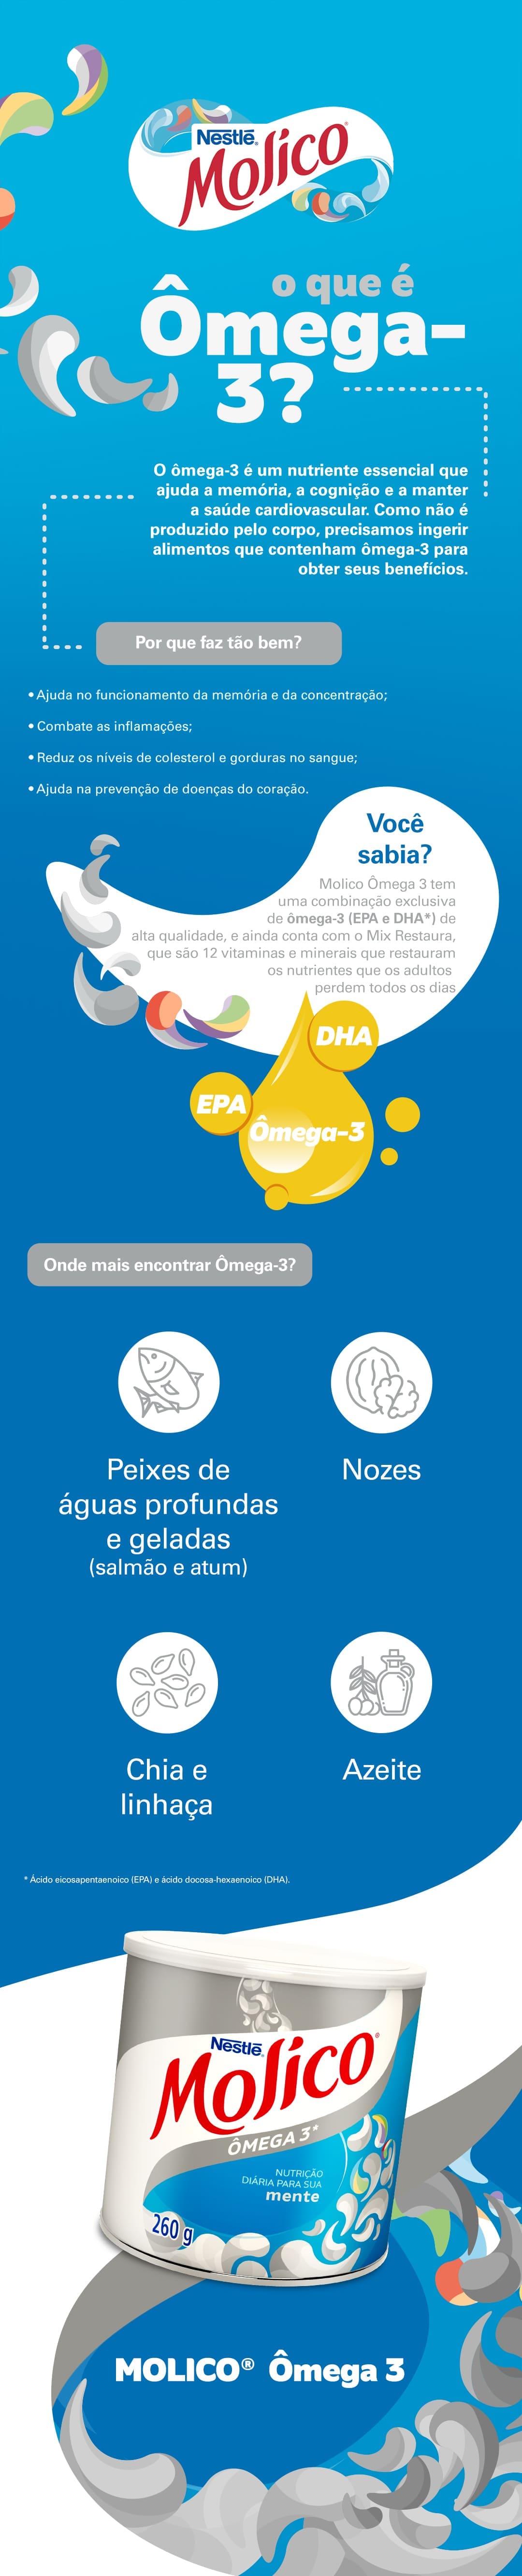 Infográfico Molico Ômega 3 - Mobile